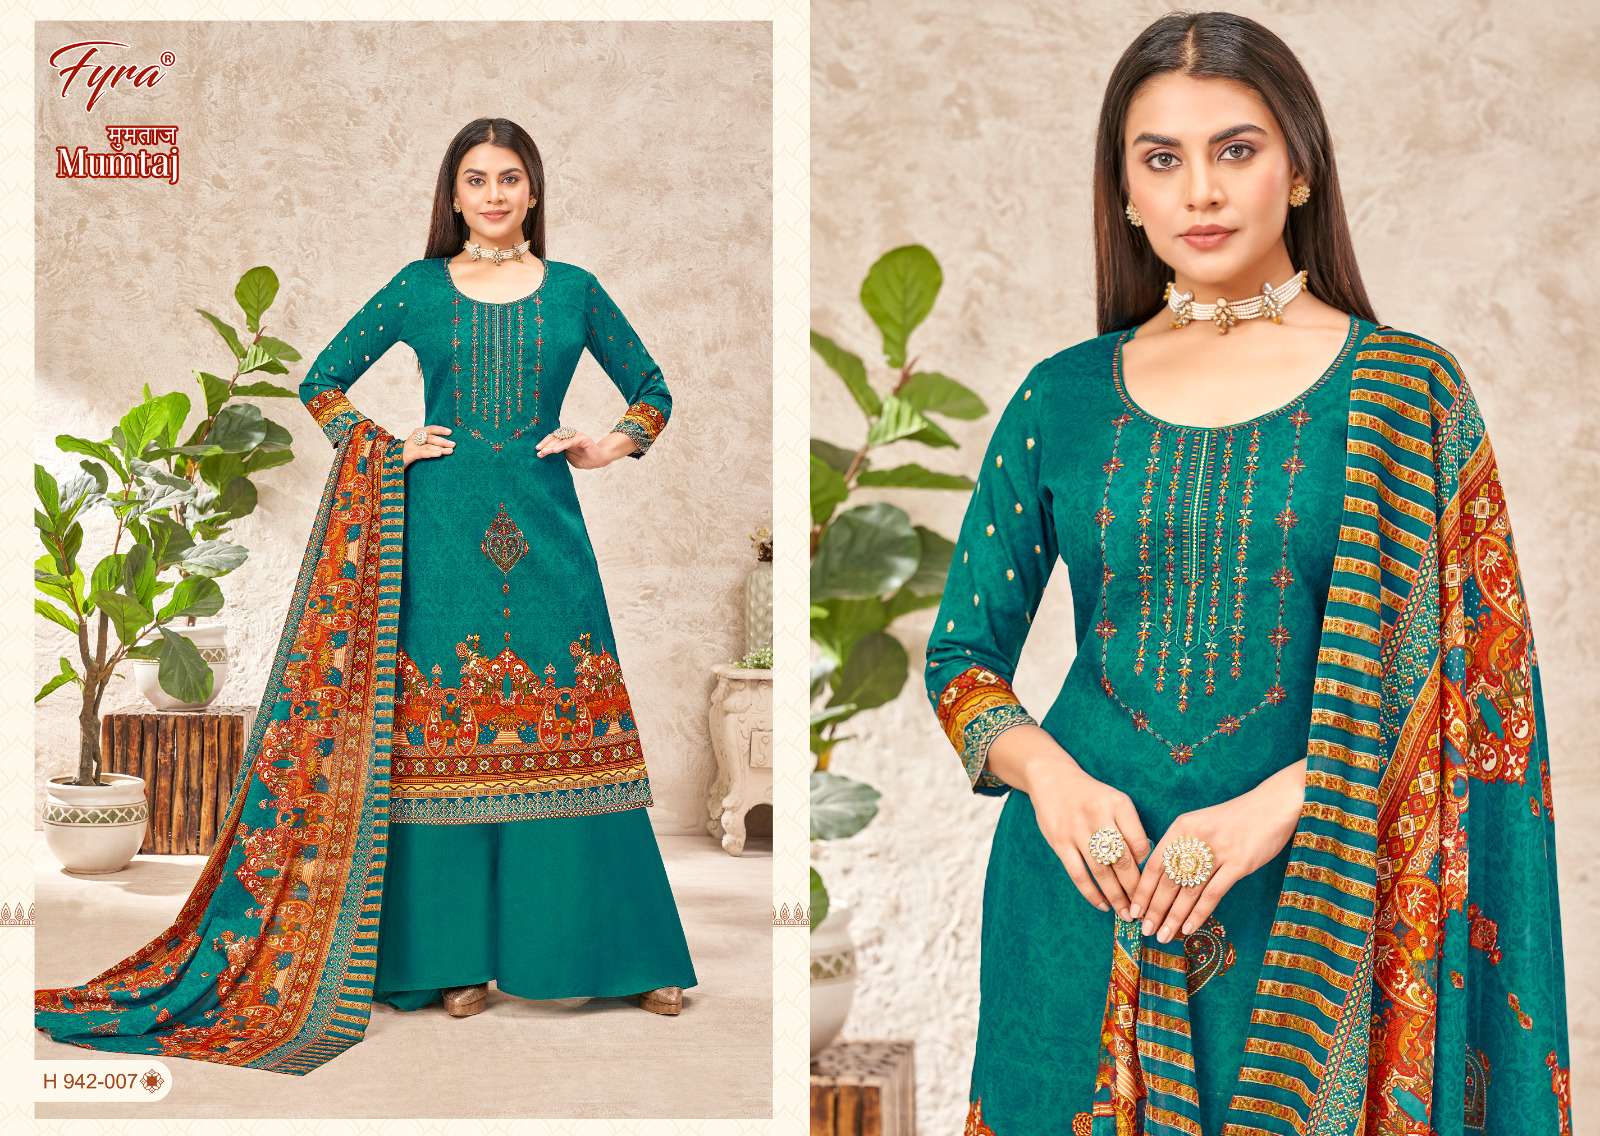 fyra designing mumtaj fancy look designer salwar kameez wholesale price surat 